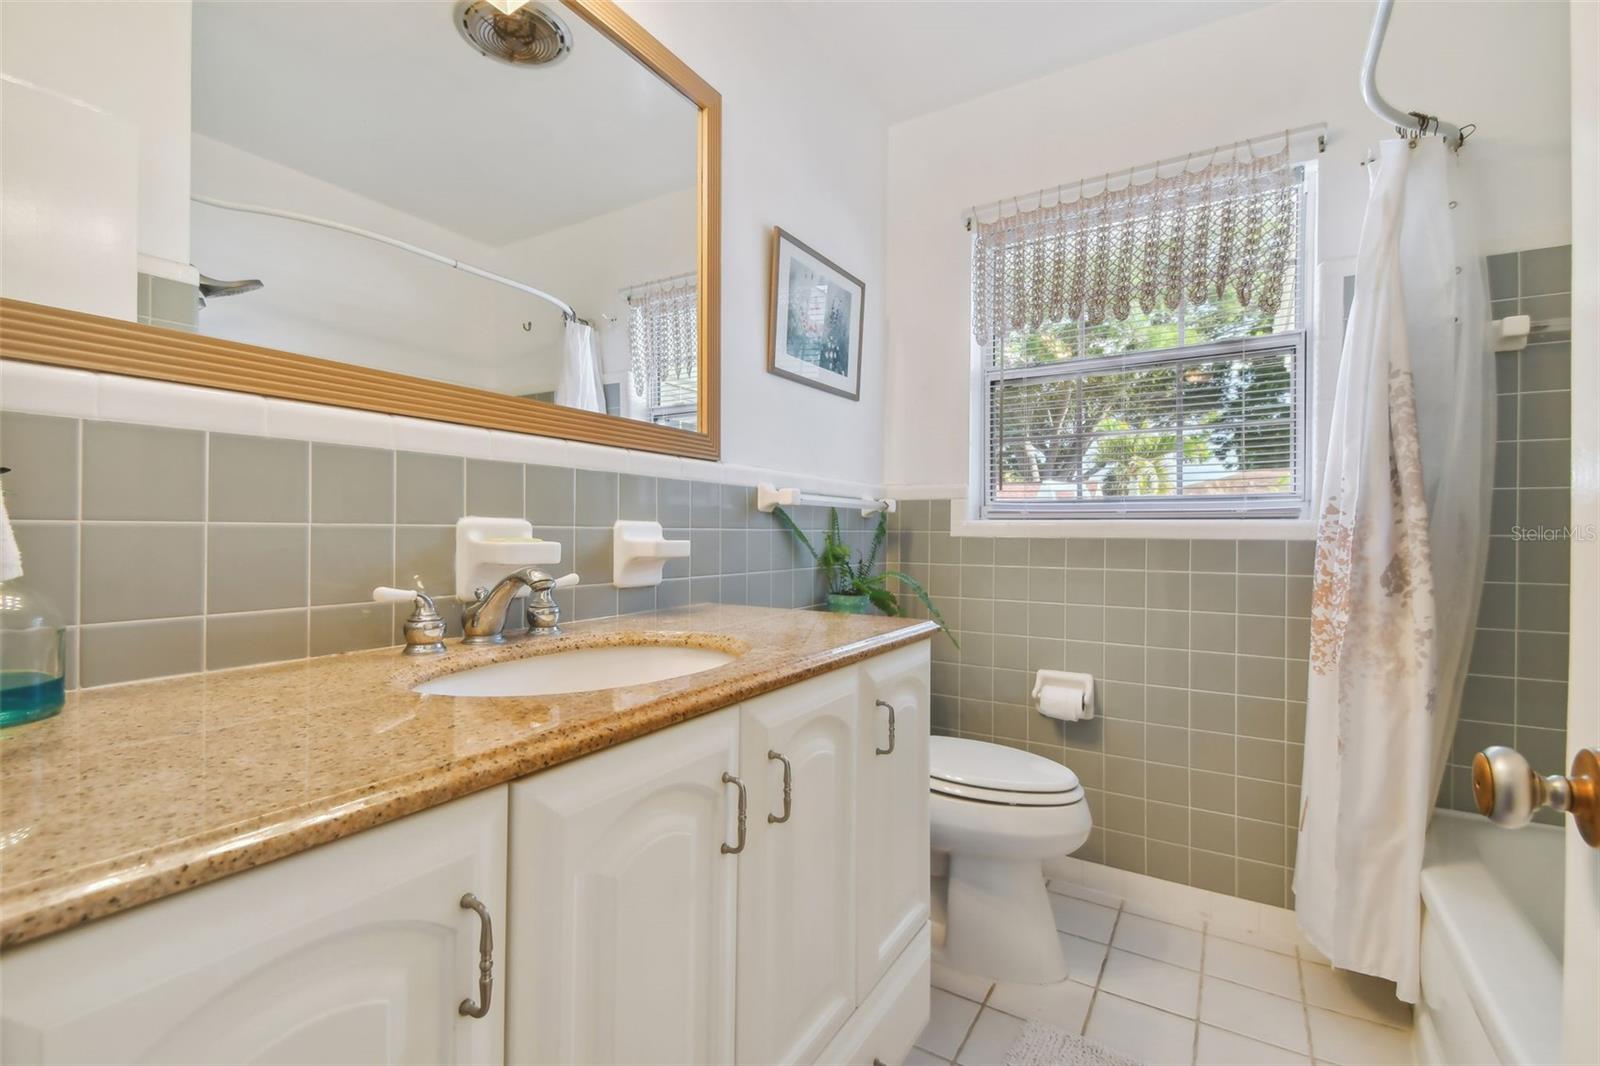 Hall Bathroom, granite counter top, tub, fresh and clean